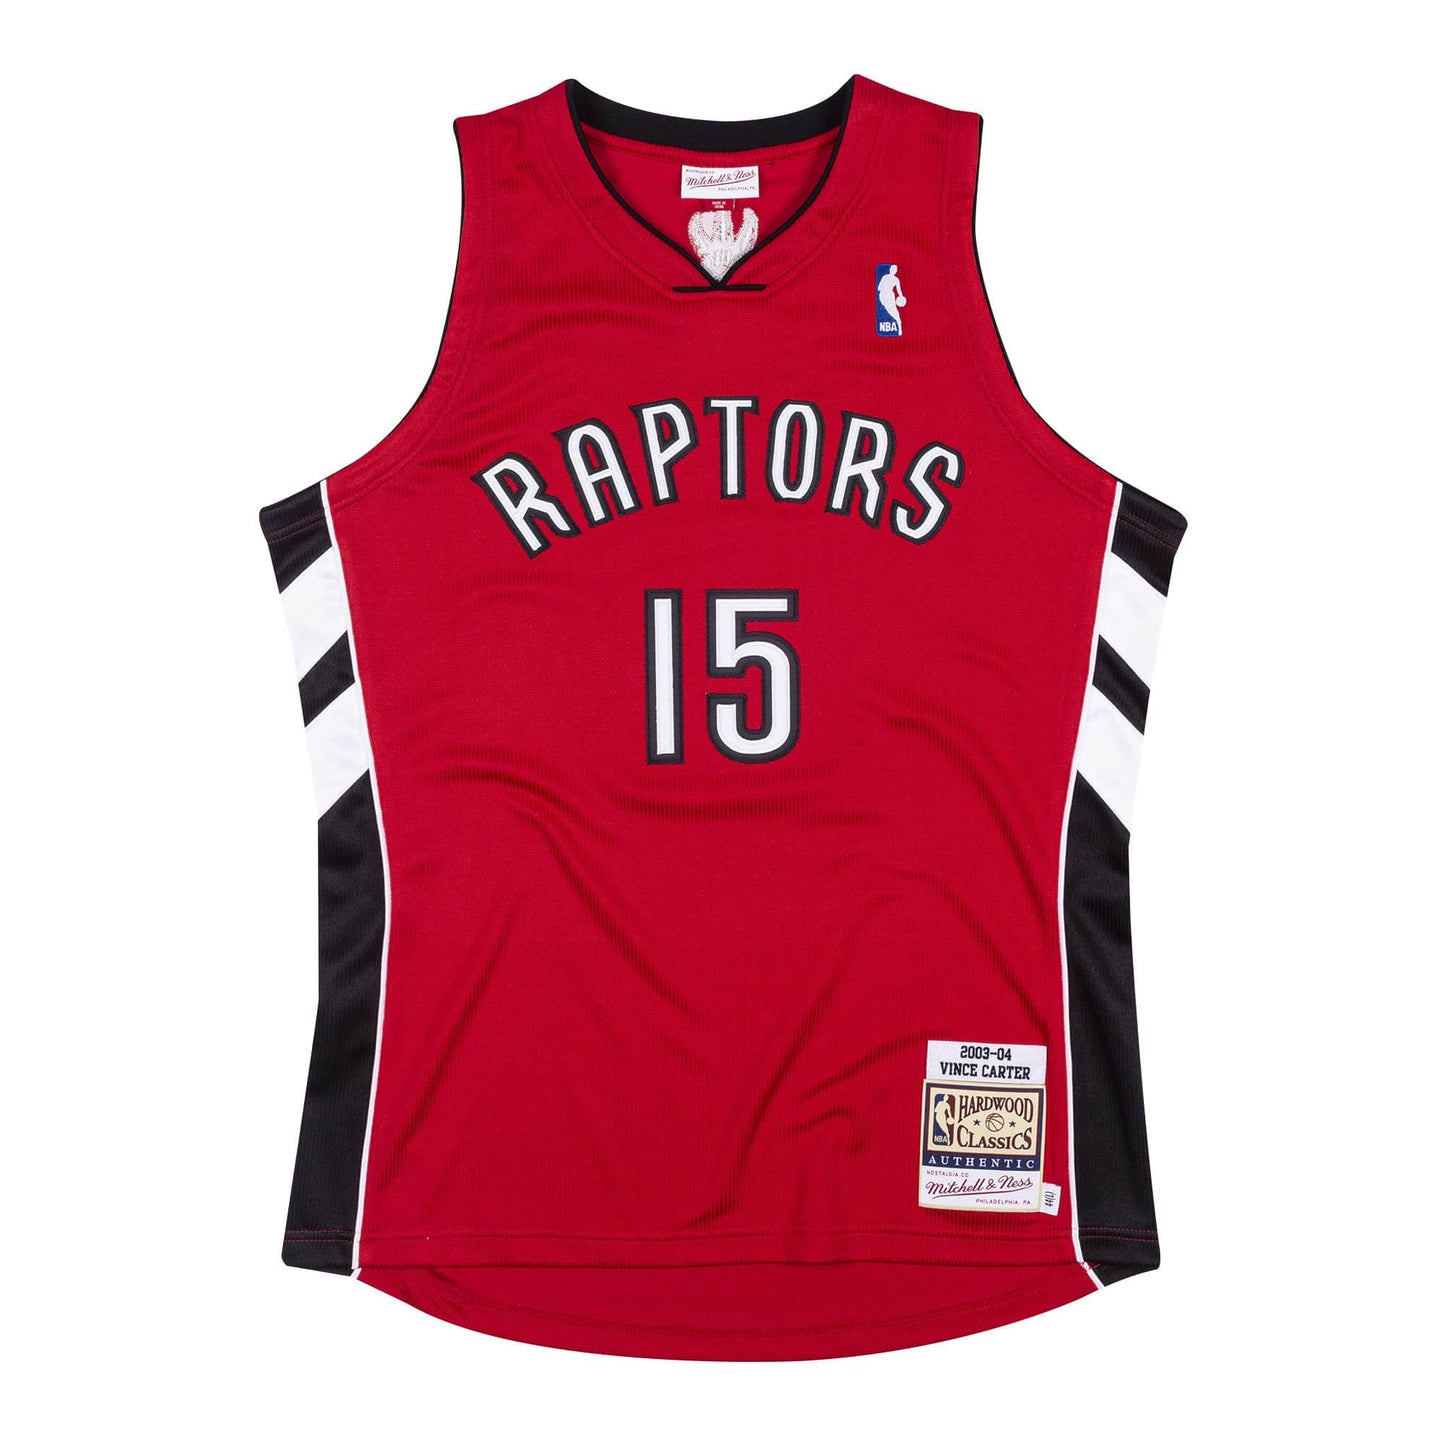 Authentic Jersey Toronto Raptors 2003-04 Vince Carter